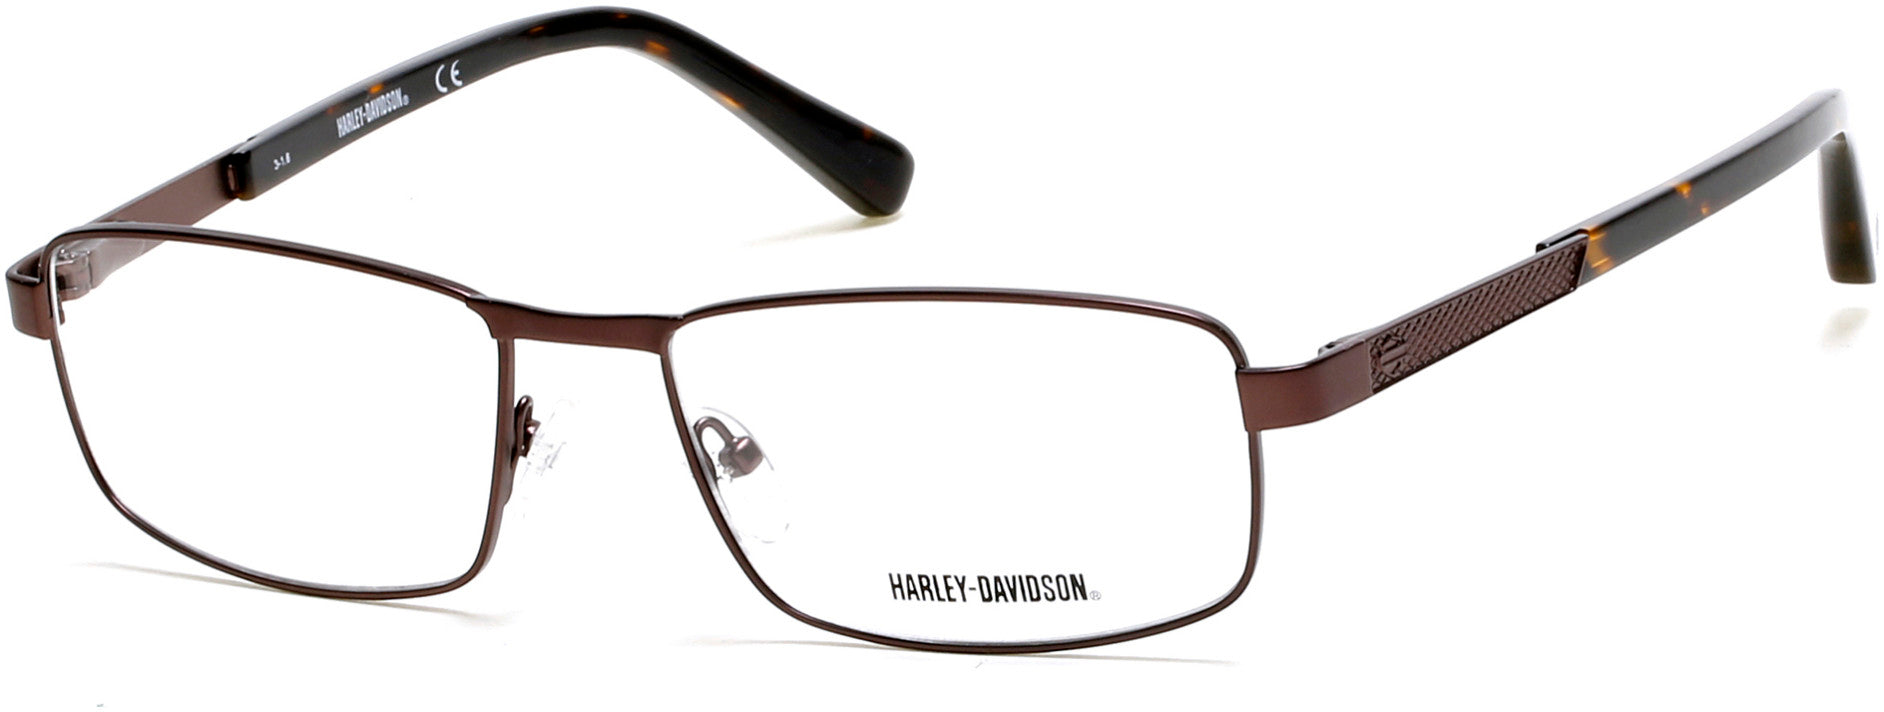 Harley-Davidson HD0751 Geometric Eyeglasses 049-049 - Matte Dark Brown